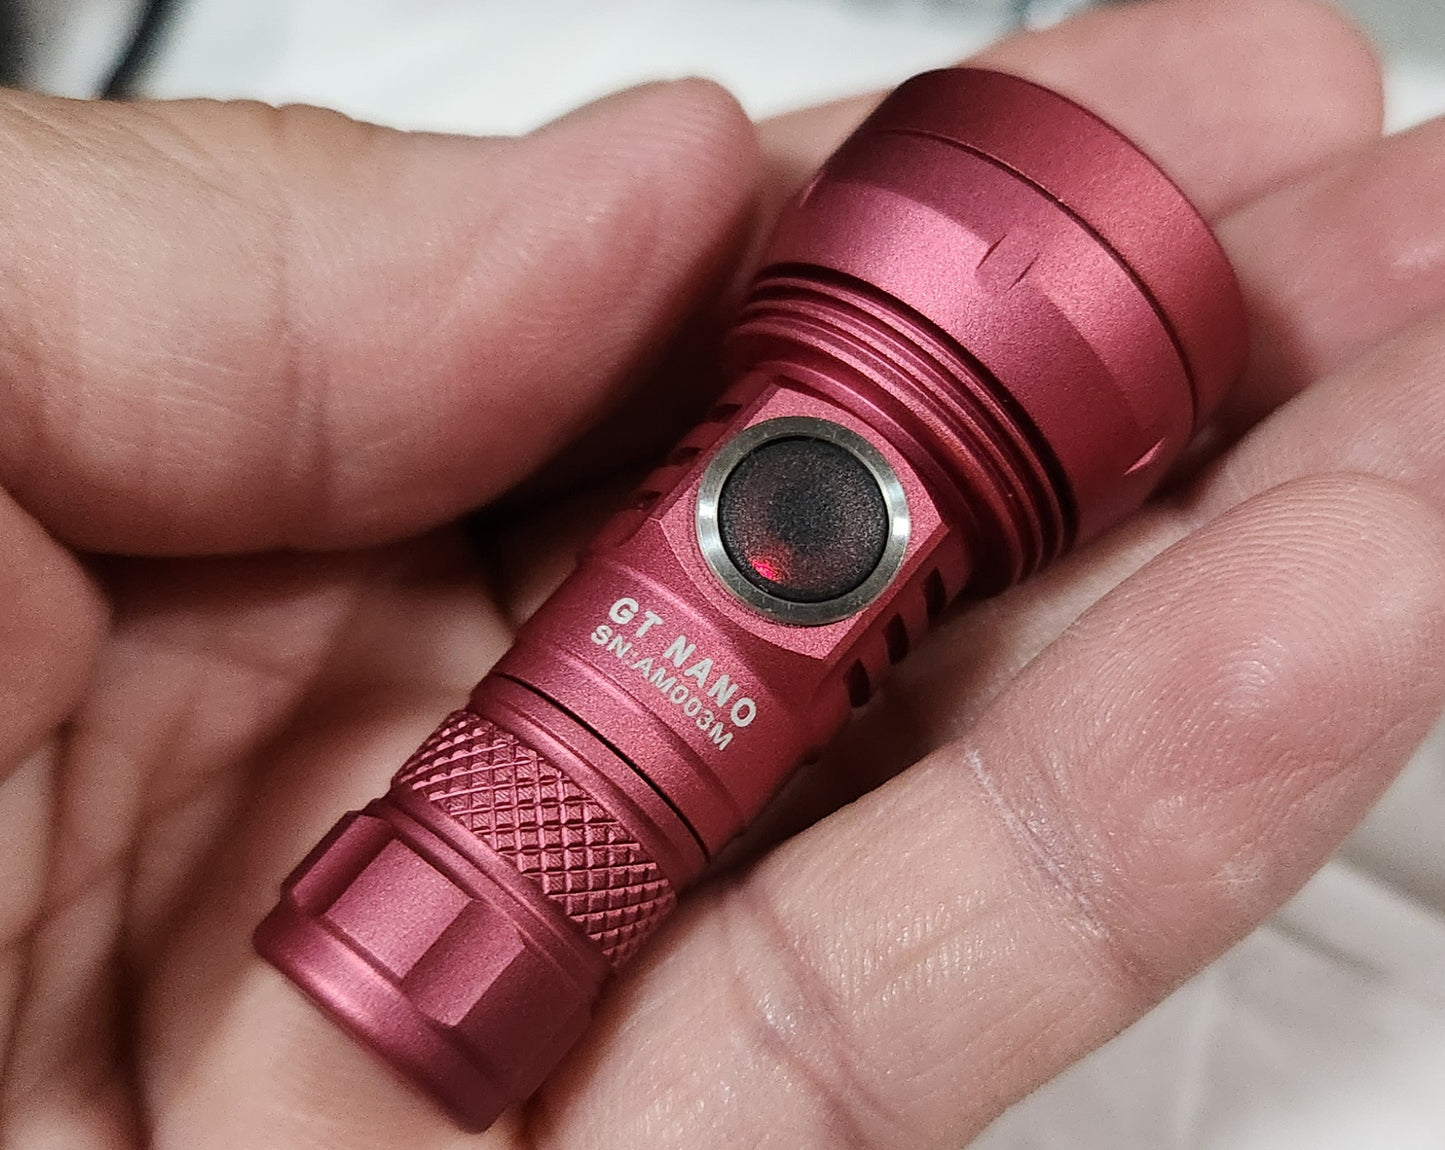 Lumintop GT Nano Red 450 Lumens 300 Meters Pocket Thrower EDC Keychain LED Flashlight NarsilM